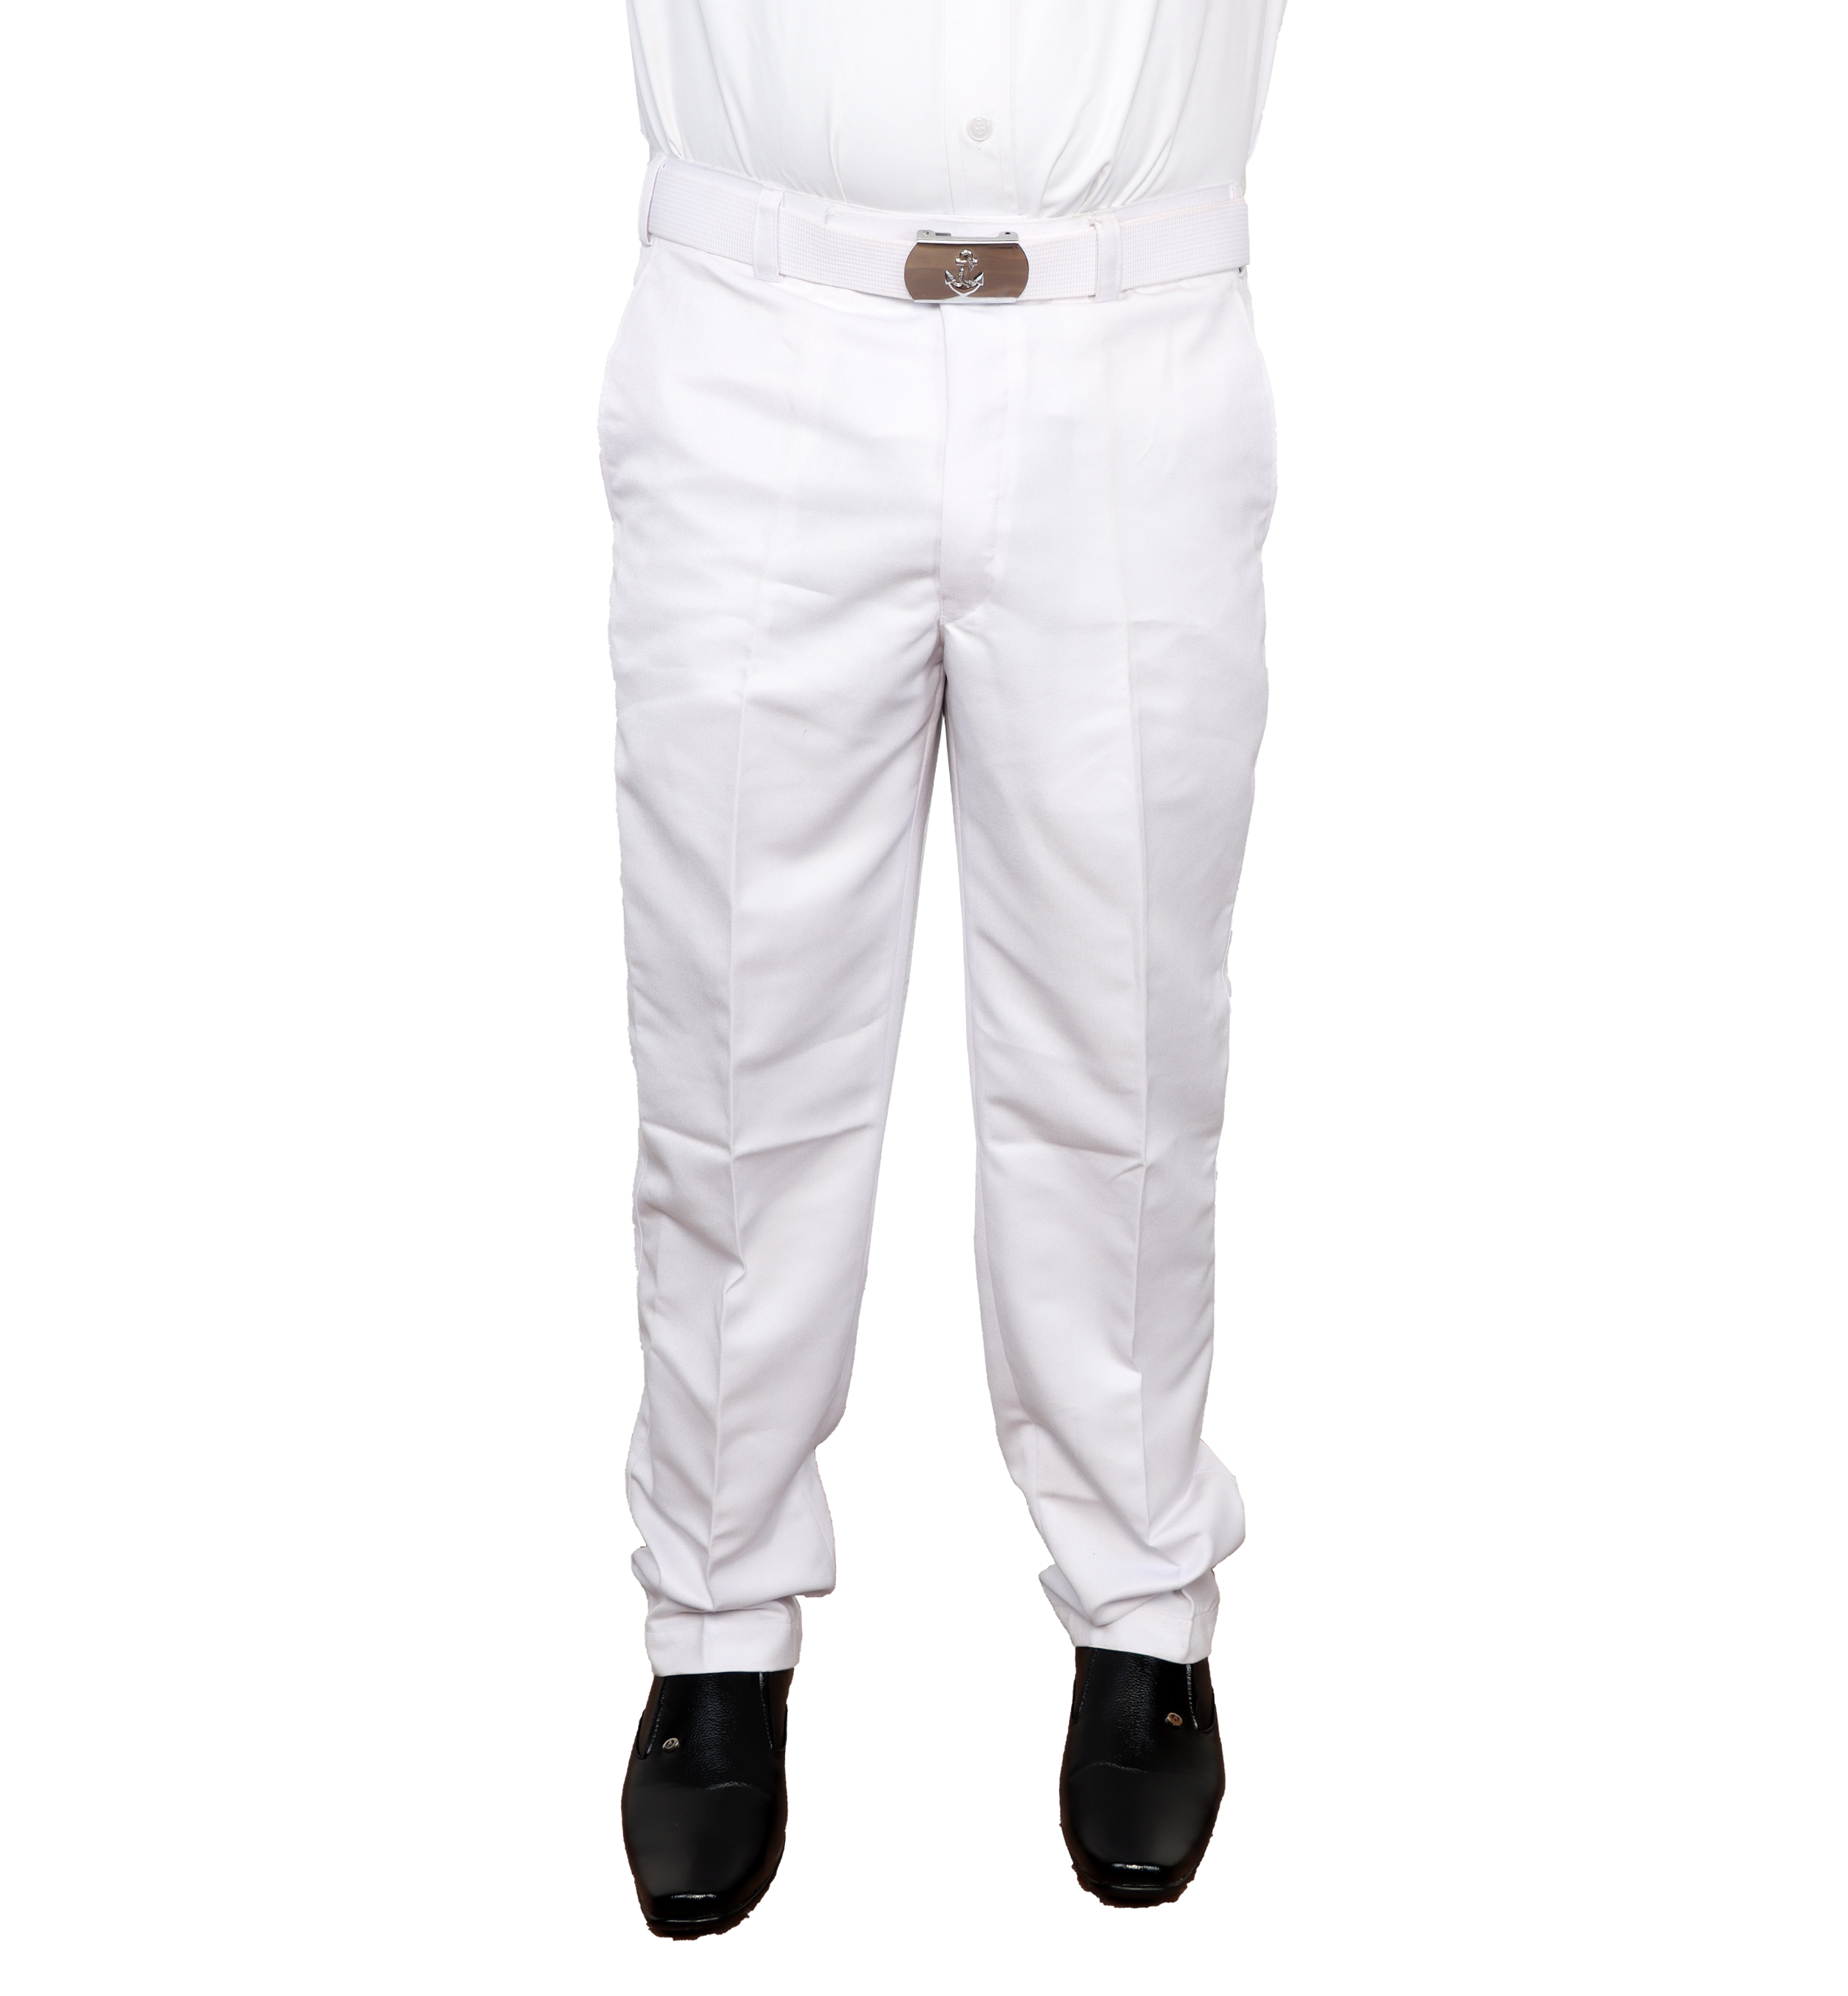 Merchant Navy White Trouser / Pant